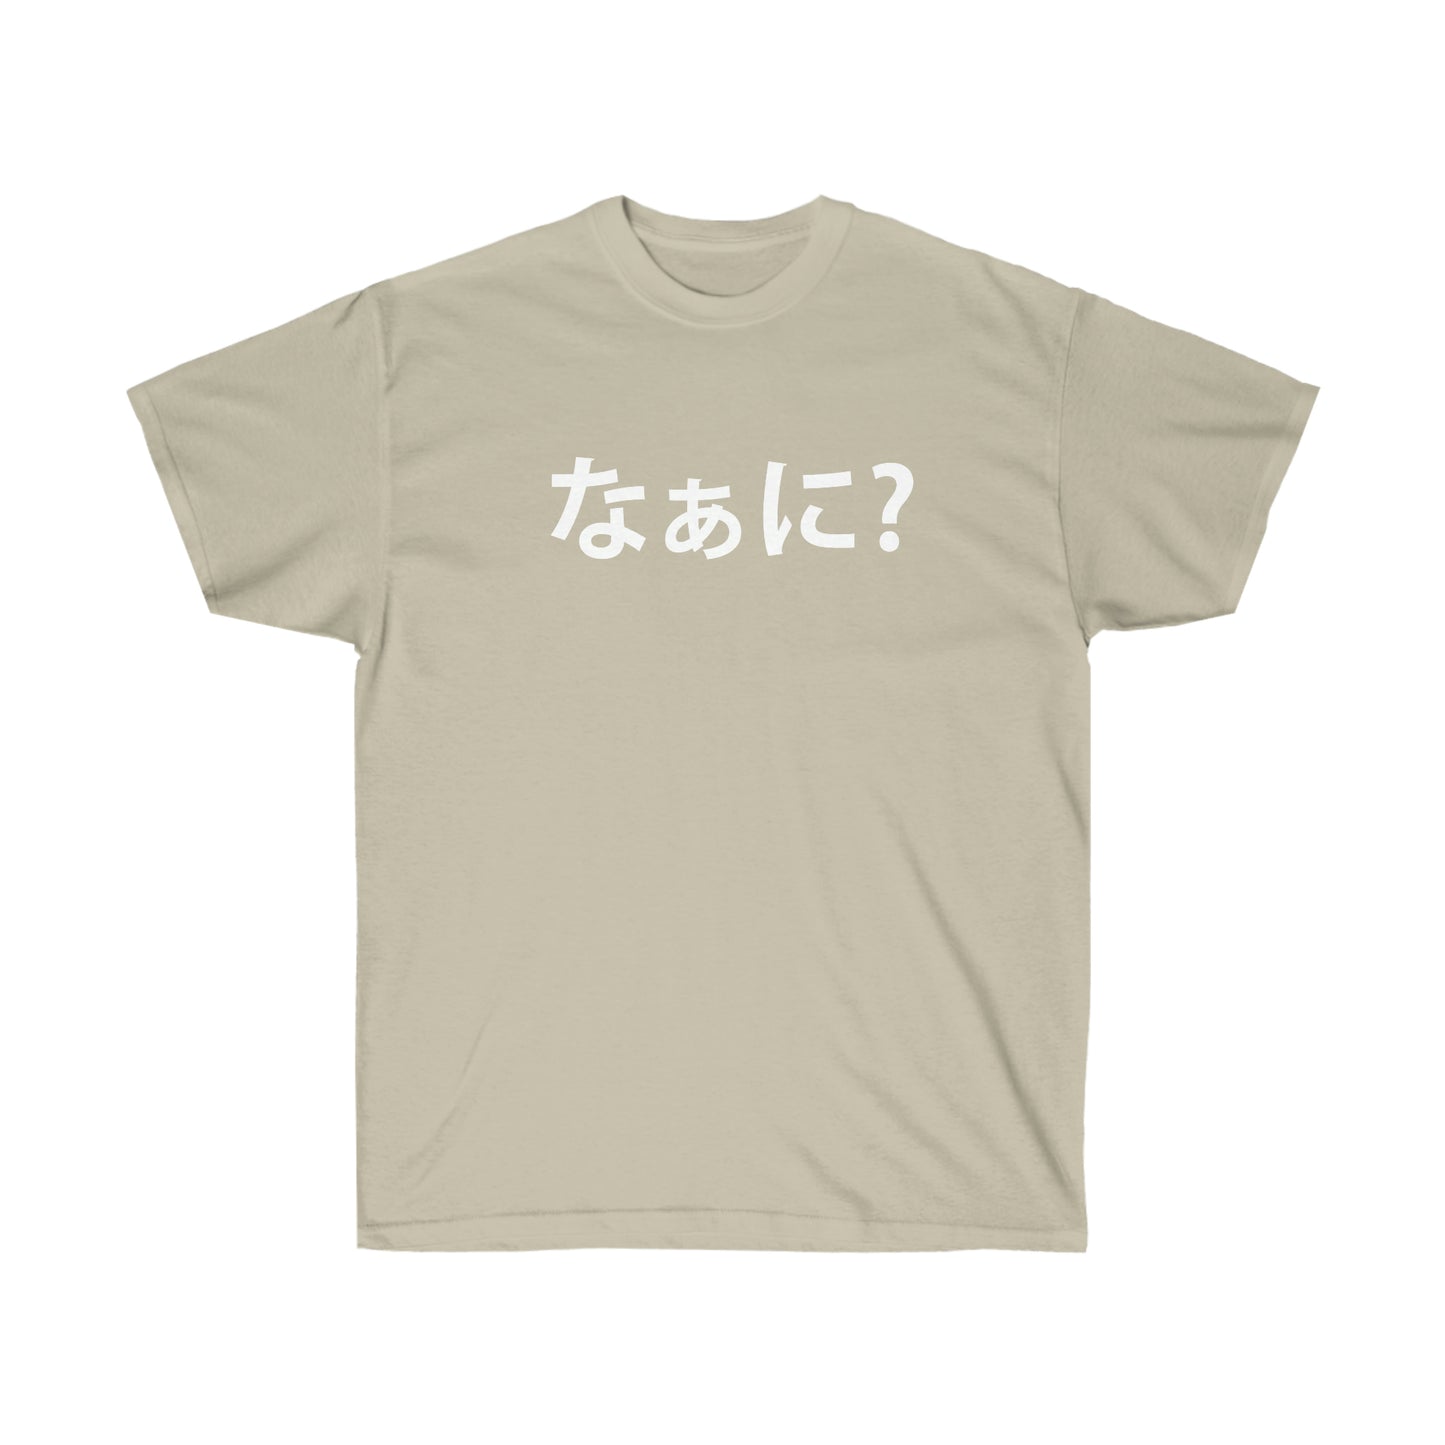 NANI? shirt What in Japanese Nani T-Shirt tee